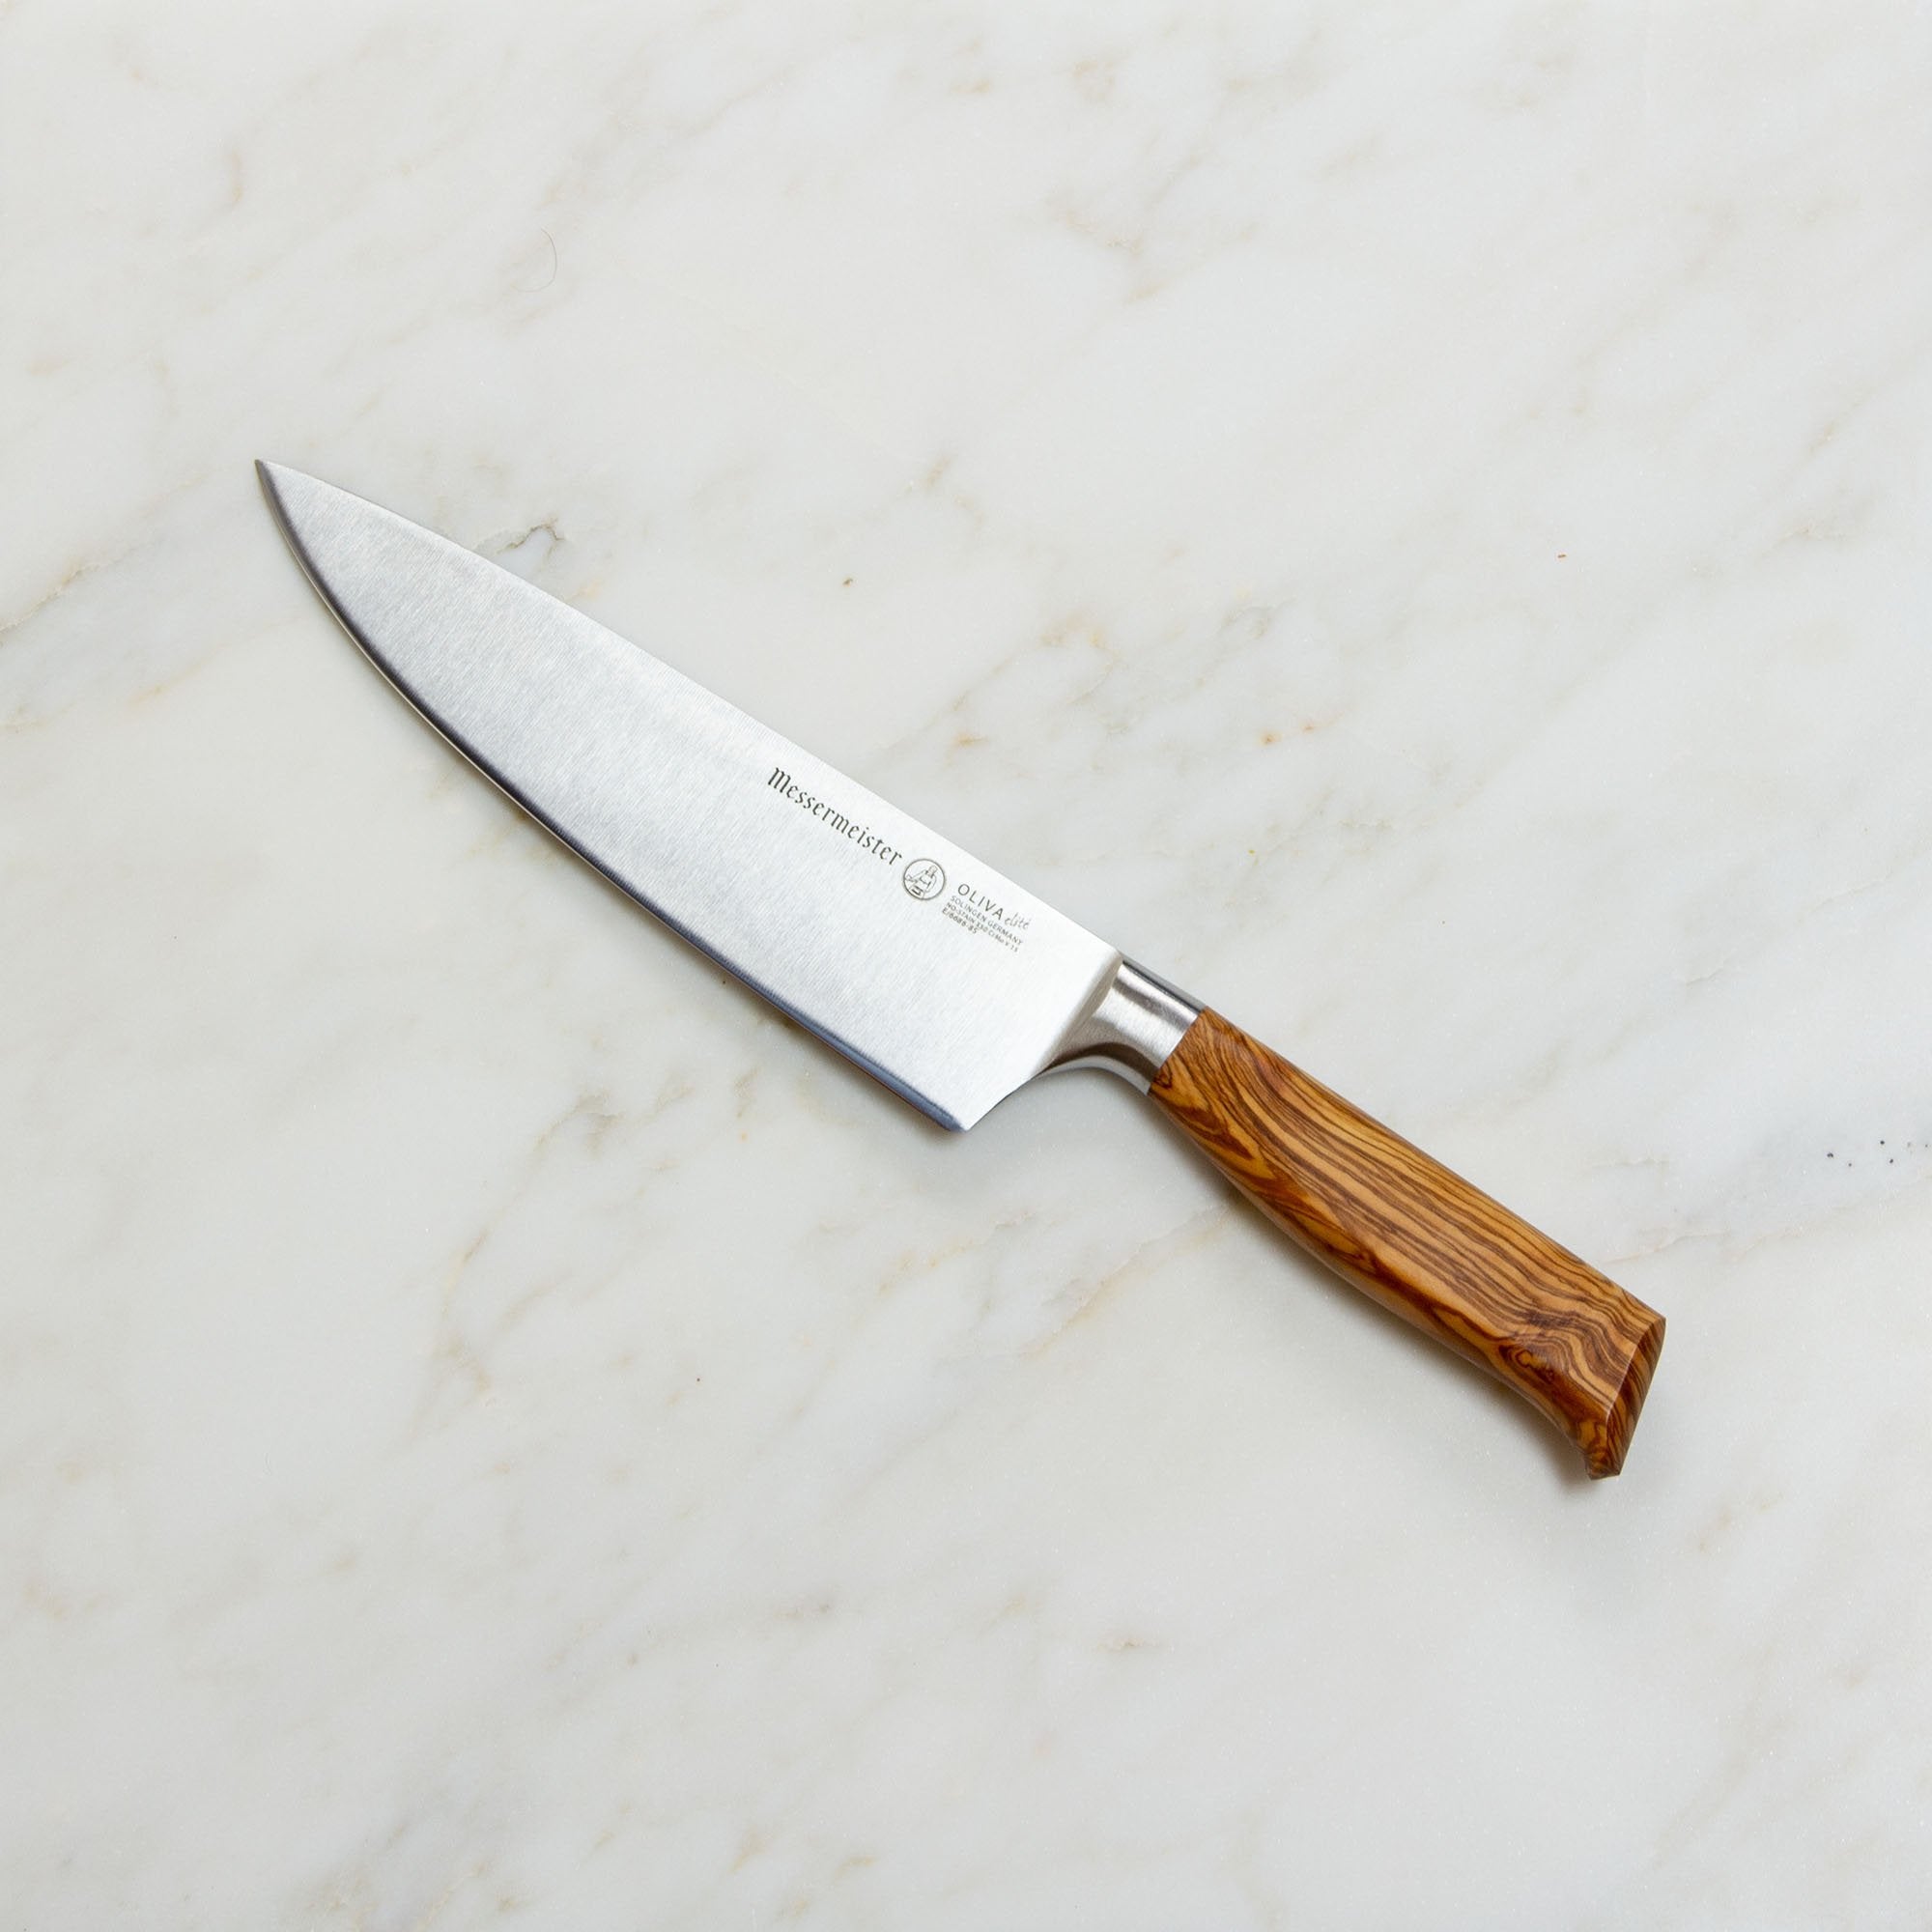 Messermeister Oliva Elite Forged 8 Stealth Chef's Knife